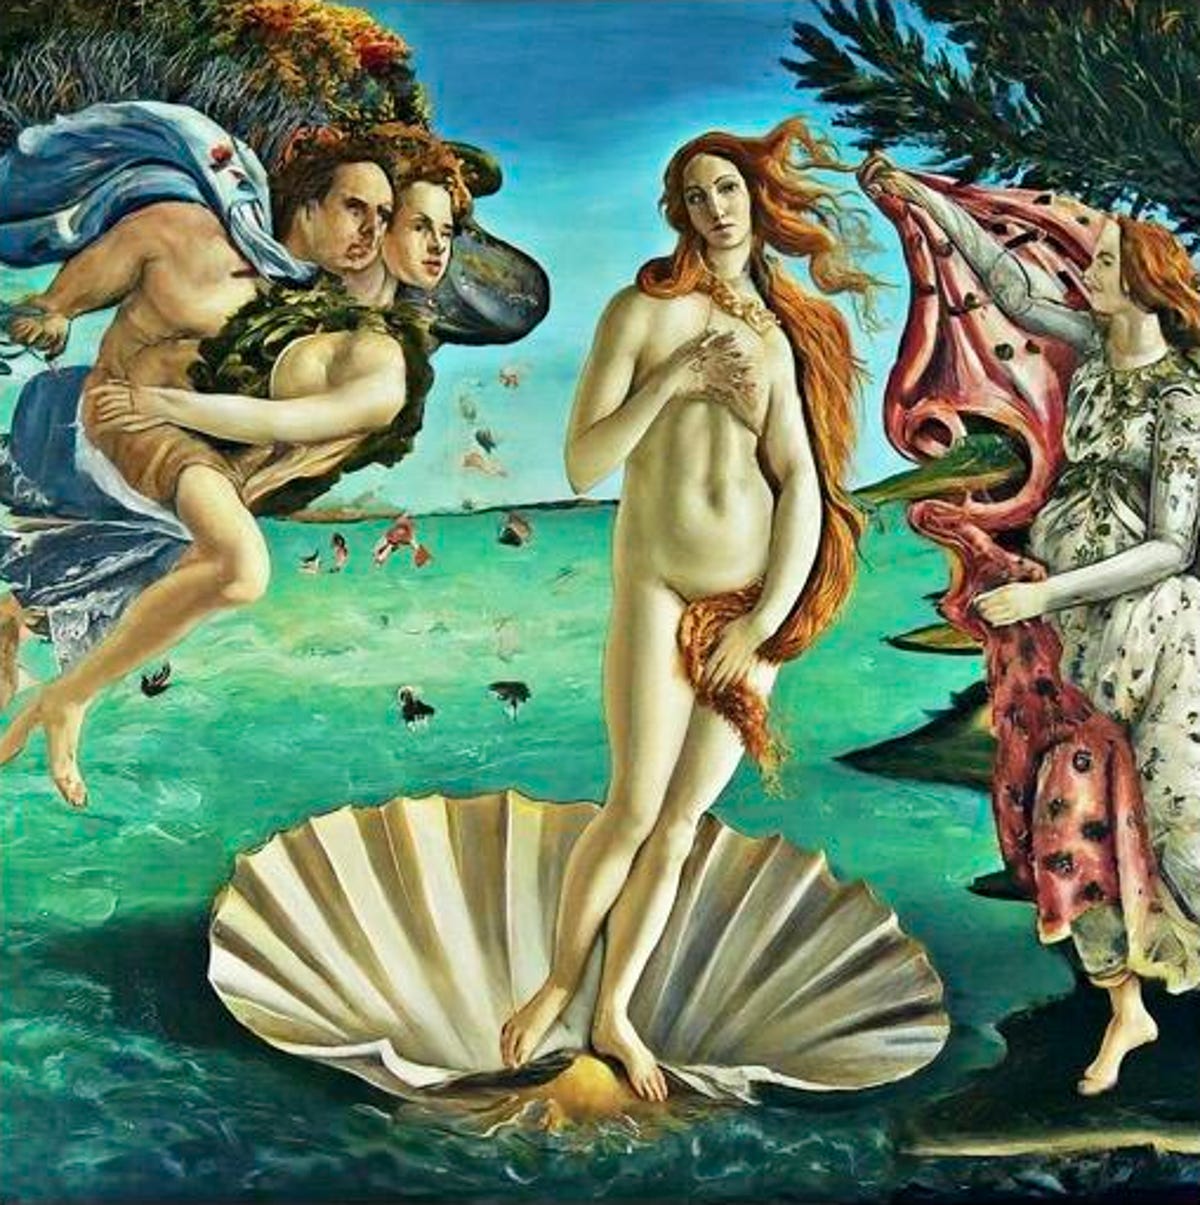 Bard-generated rendering of Botticelli's Birth of Venus